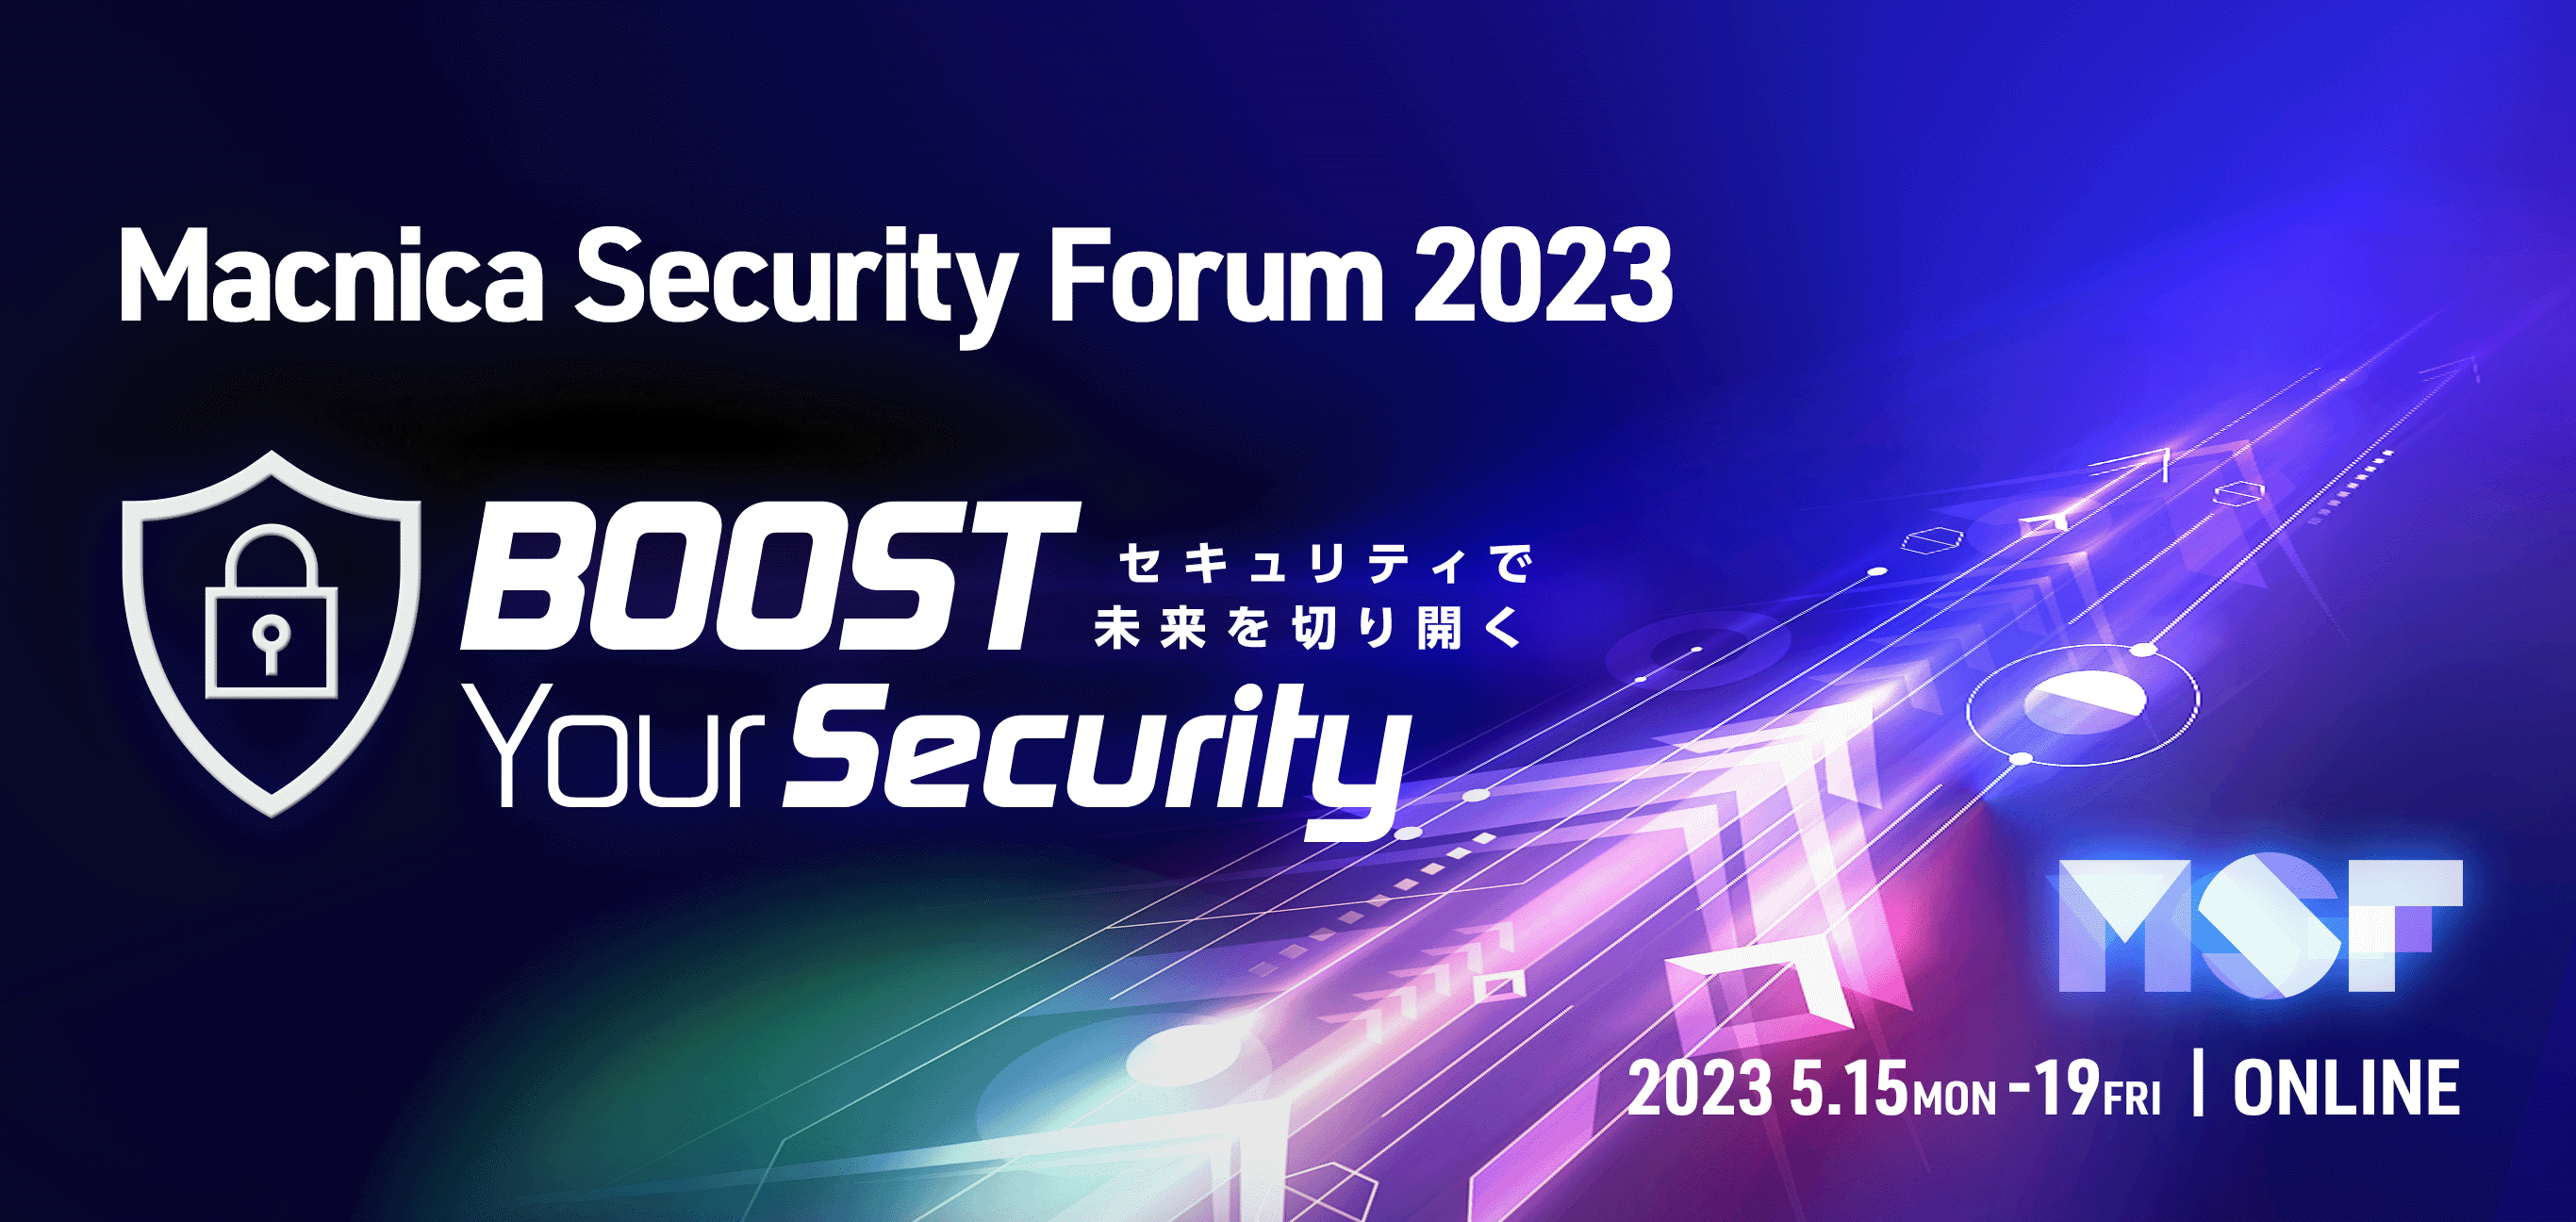 }NjJAƂ̃ZLeBggD́hgXLh㉟ ICJt@XuMacnica Security Forum 2023vJ